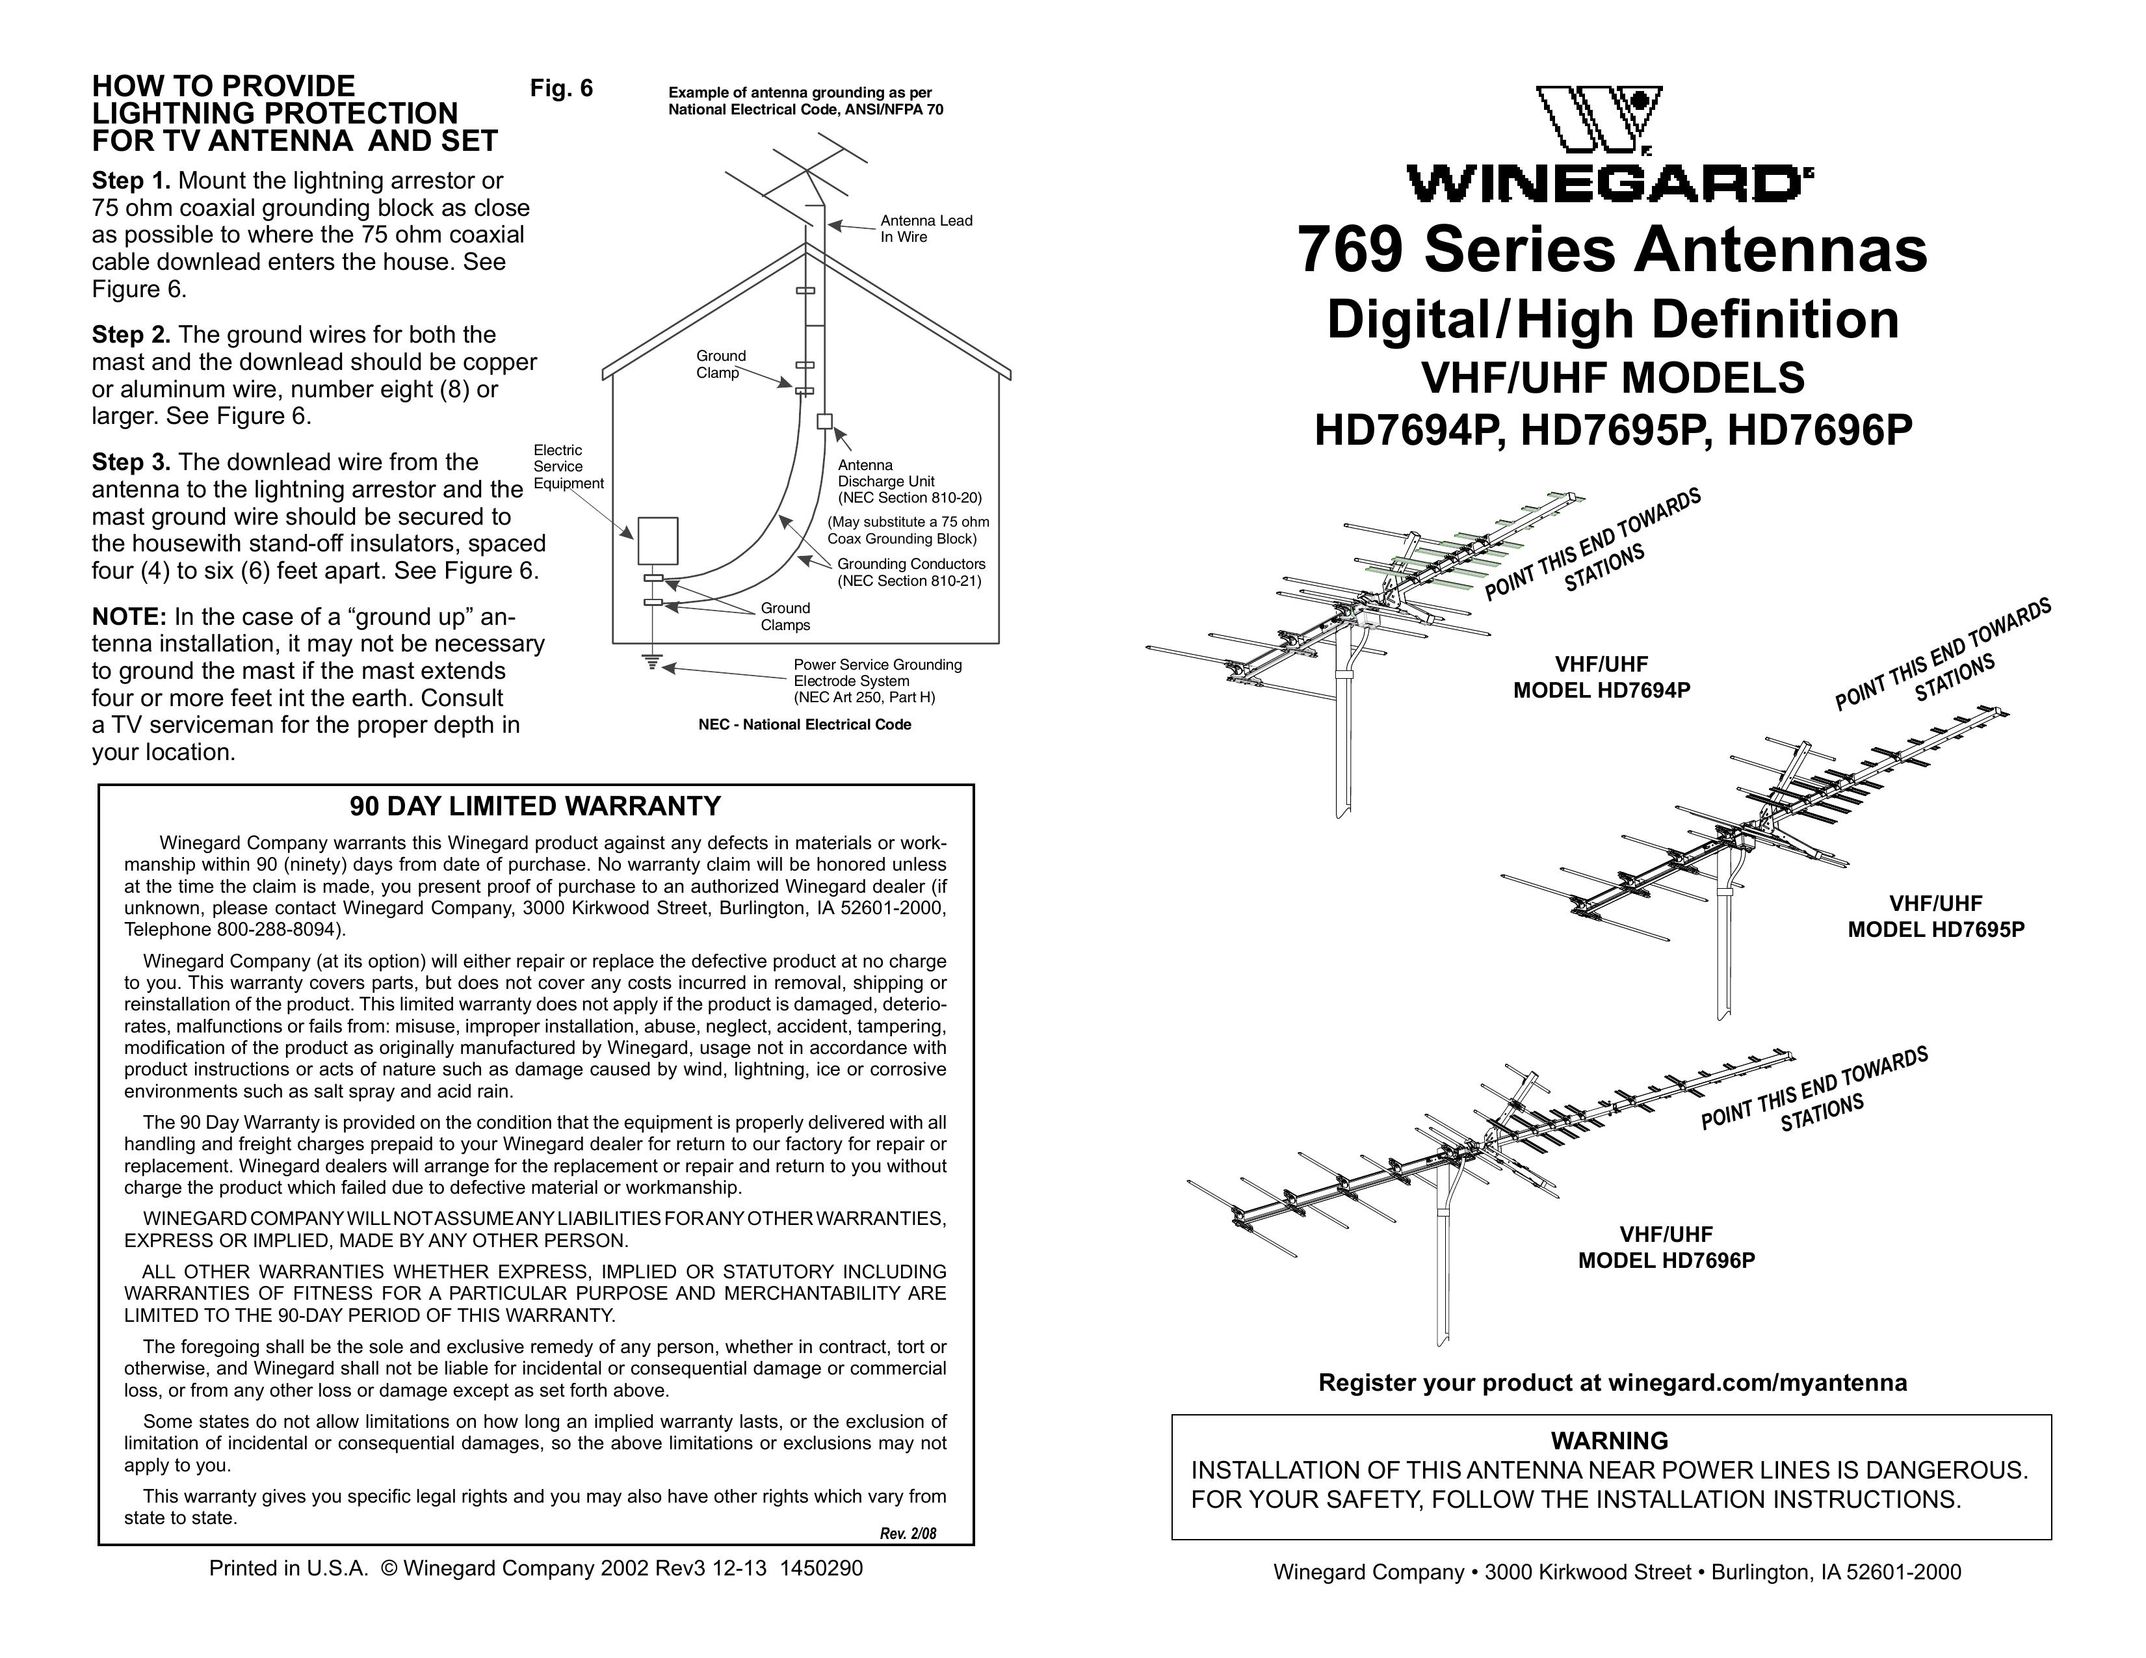 Winegard HD7695P Surge Protector User Manual